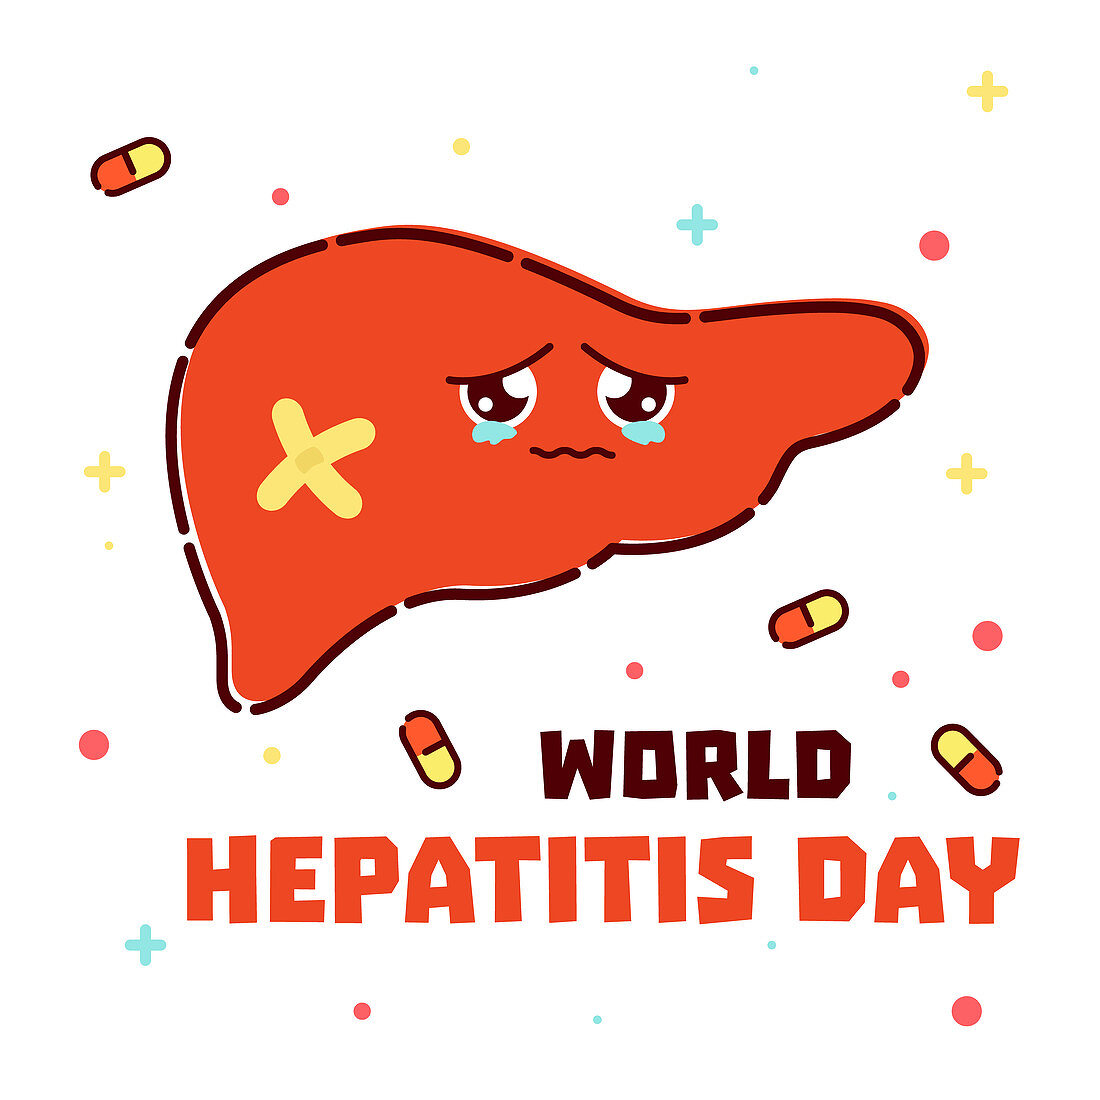 Hepatitis, conceptual illustration